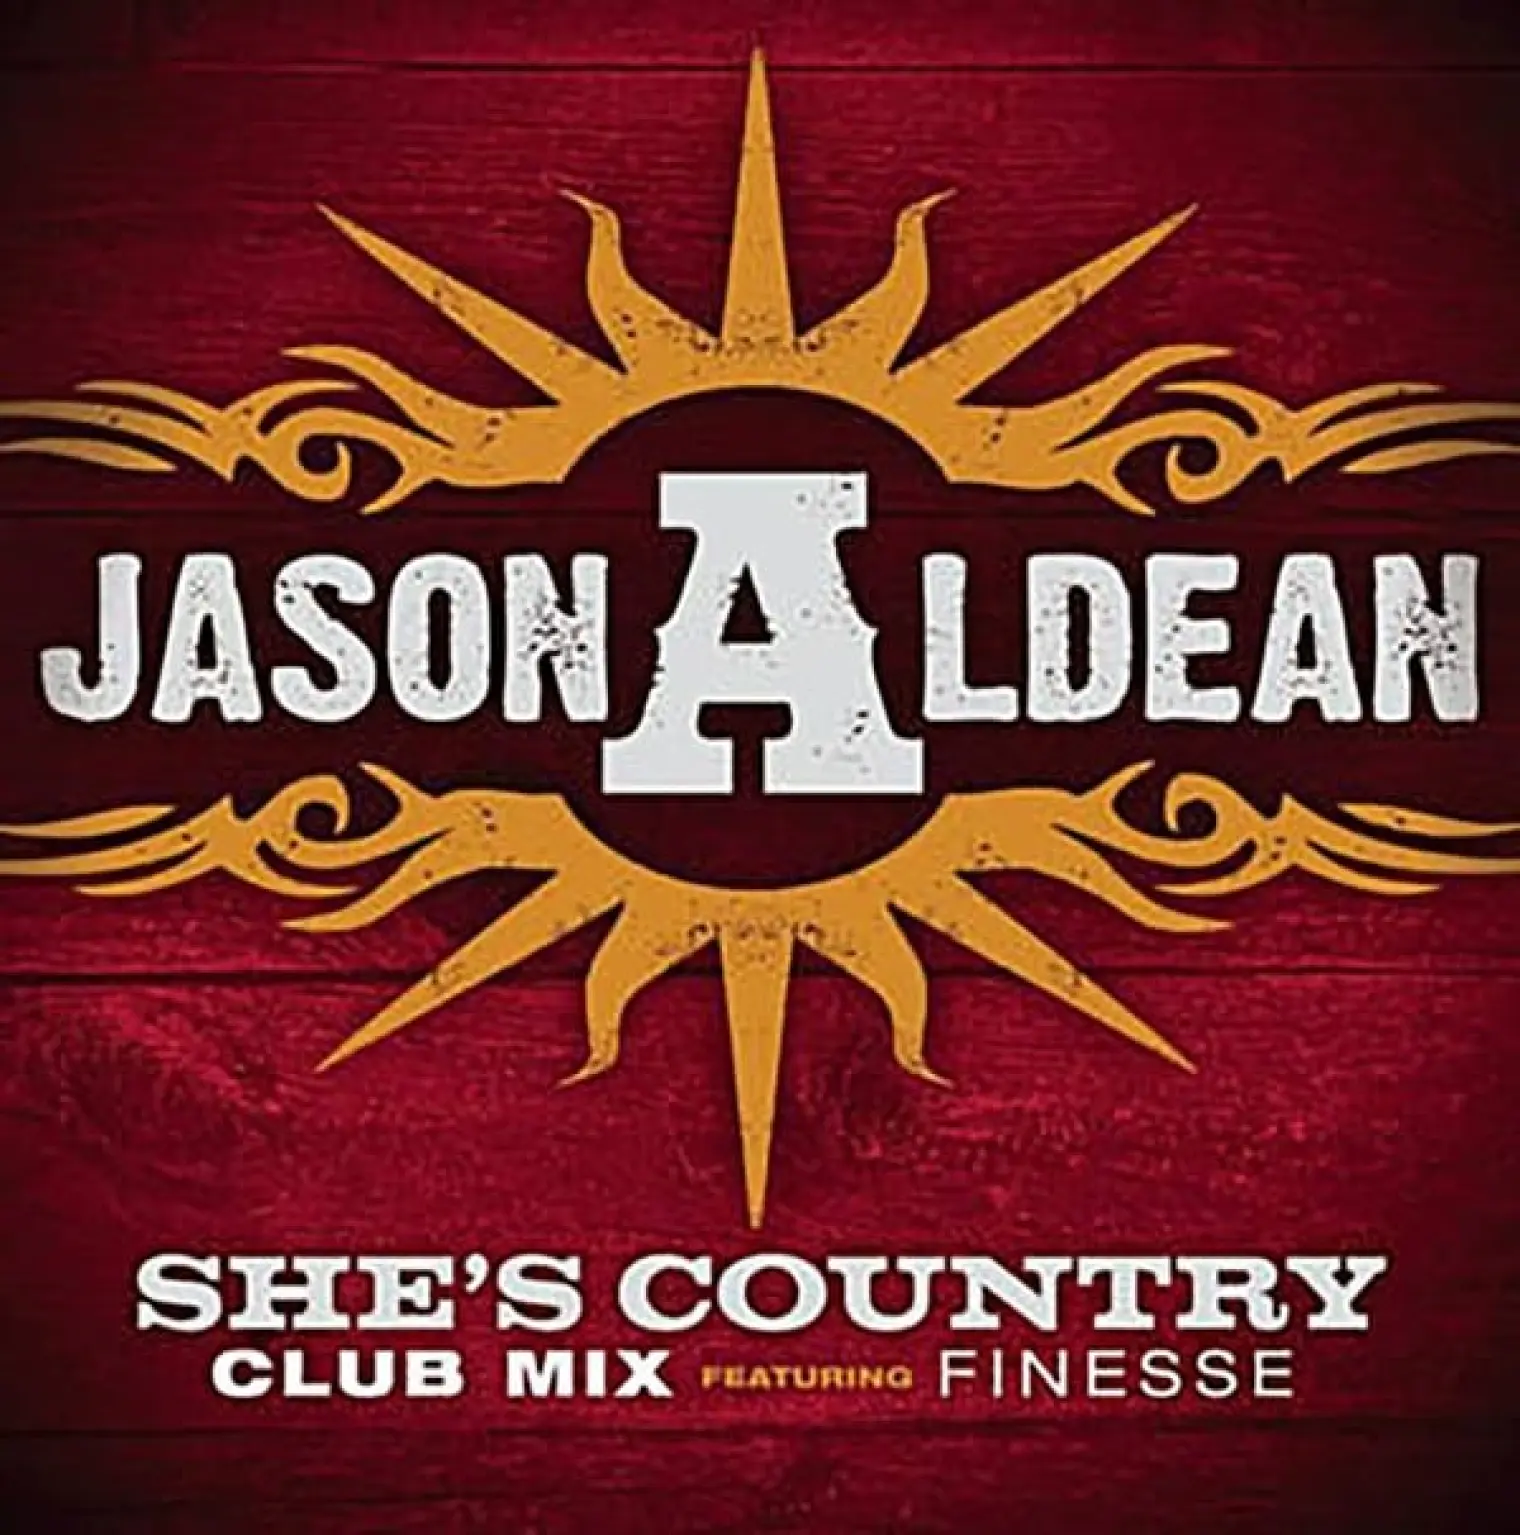 She's Country (Club Mix) -  Jason Aldean 